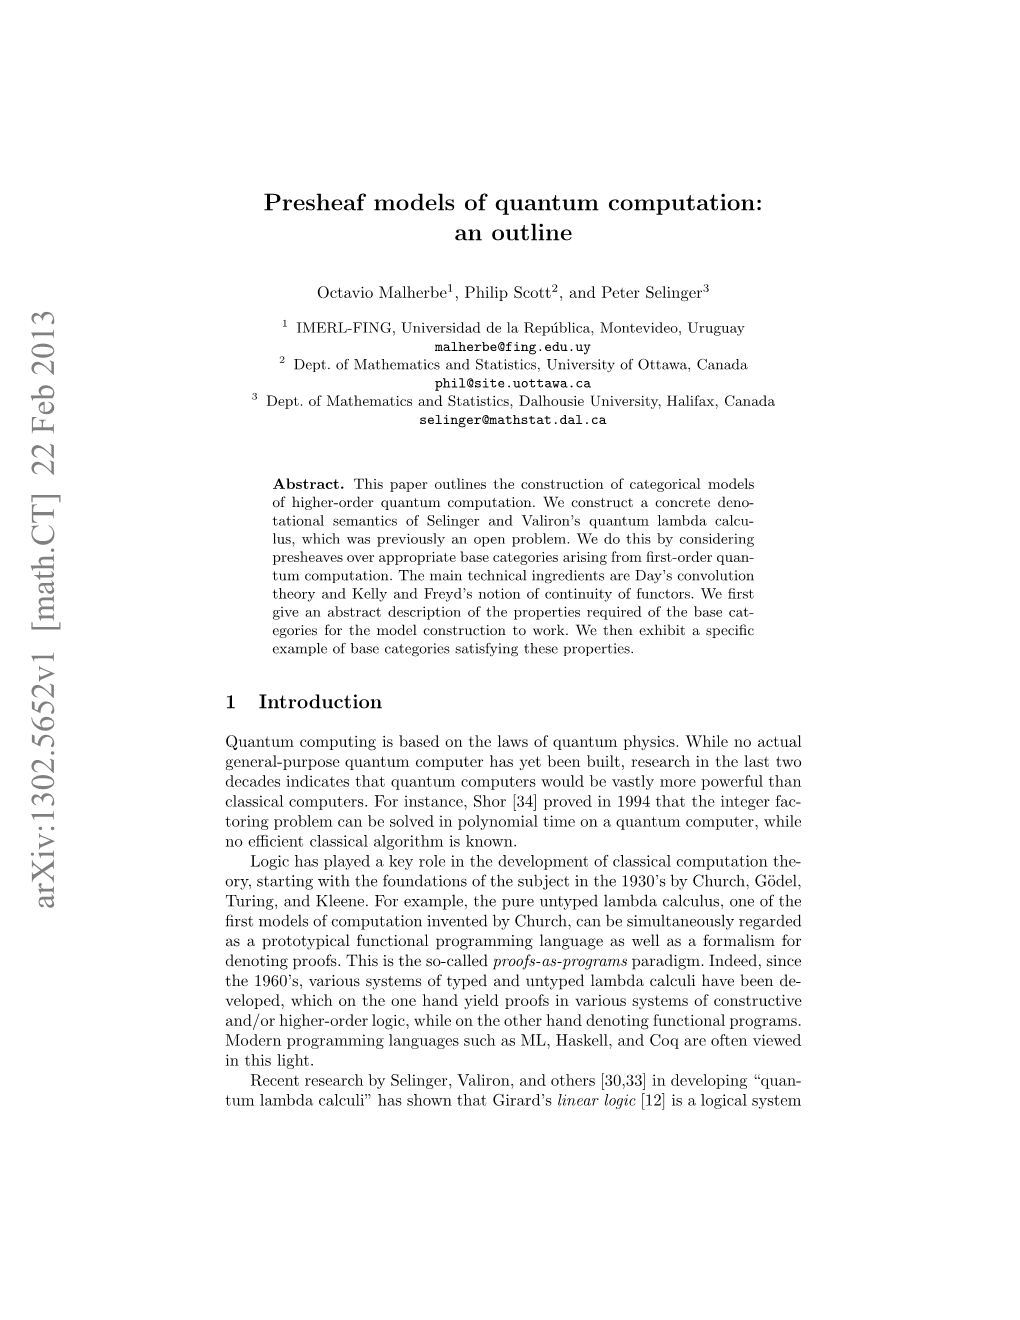 Presheaf Models of Quantum Computation: an Outline